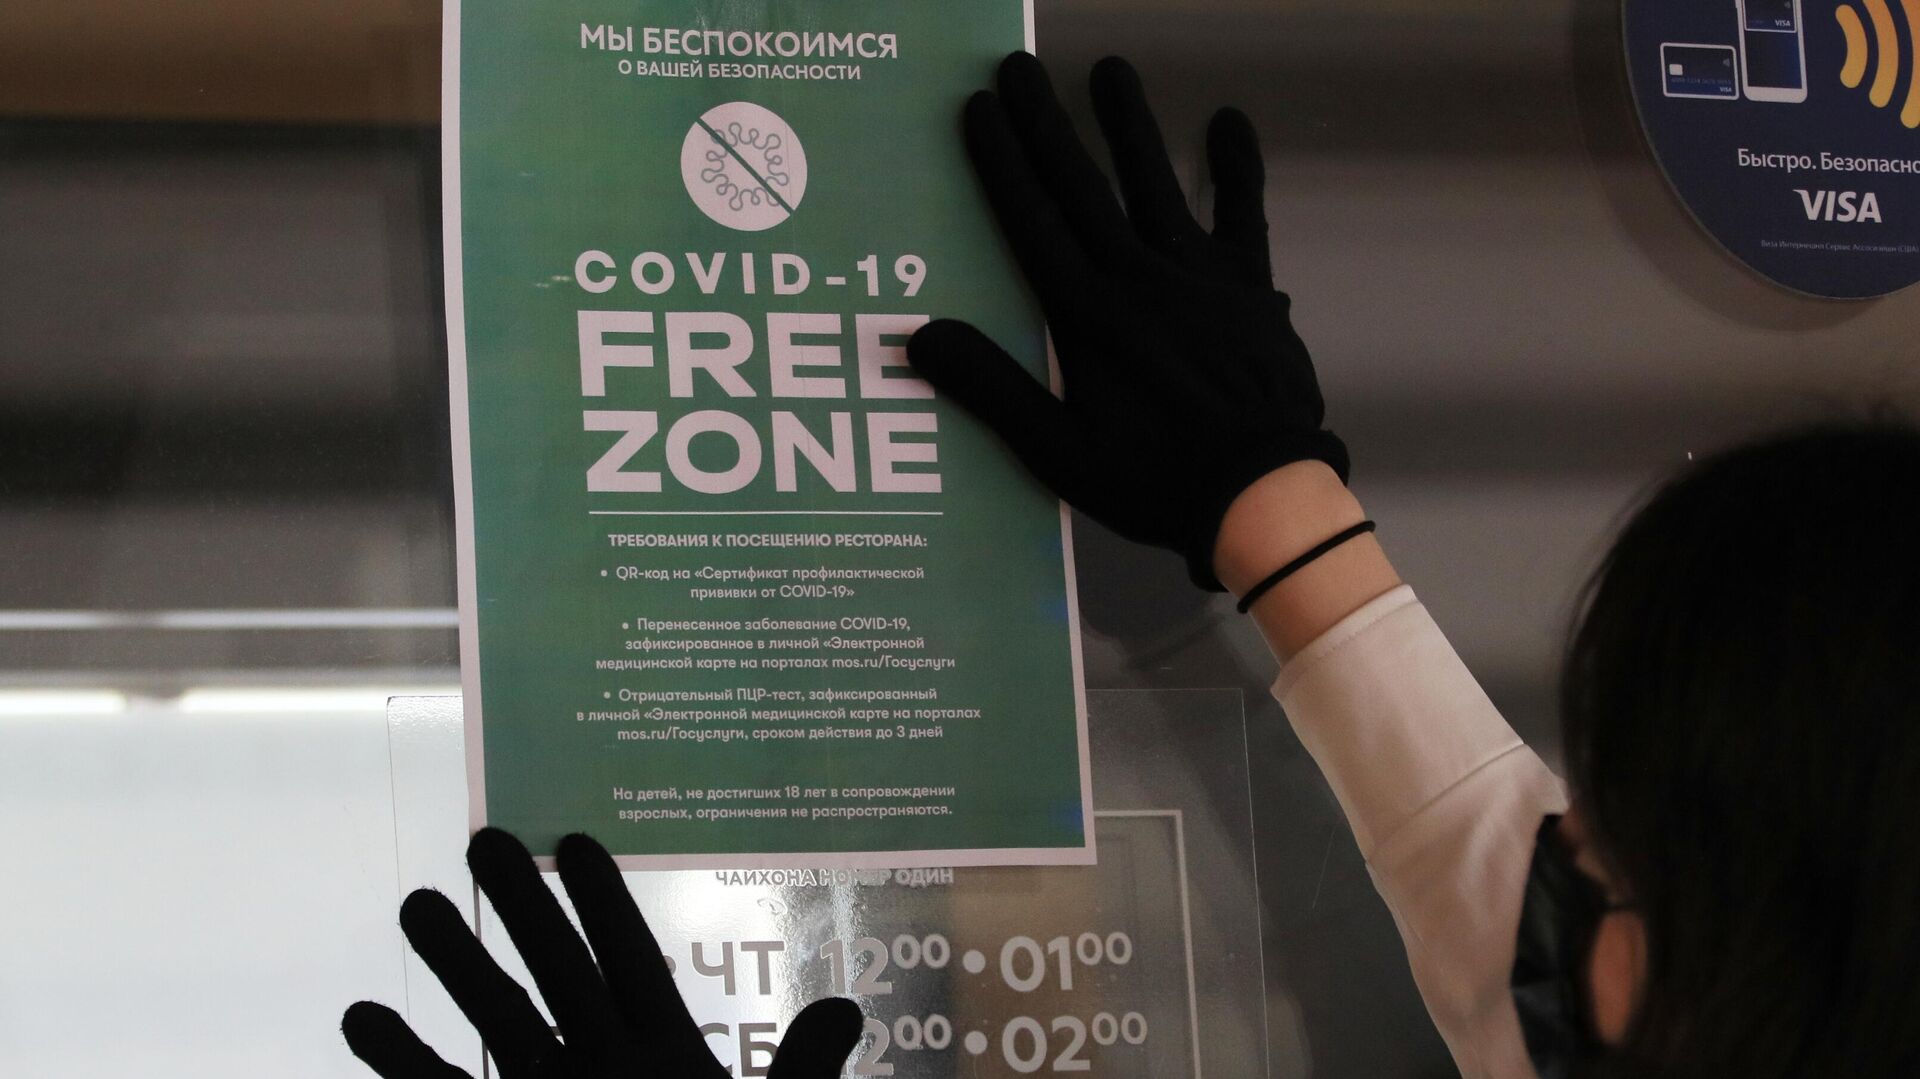 В Москве выявили нарушения мер по COVID-19 в 12 кафе "Шоколадница"